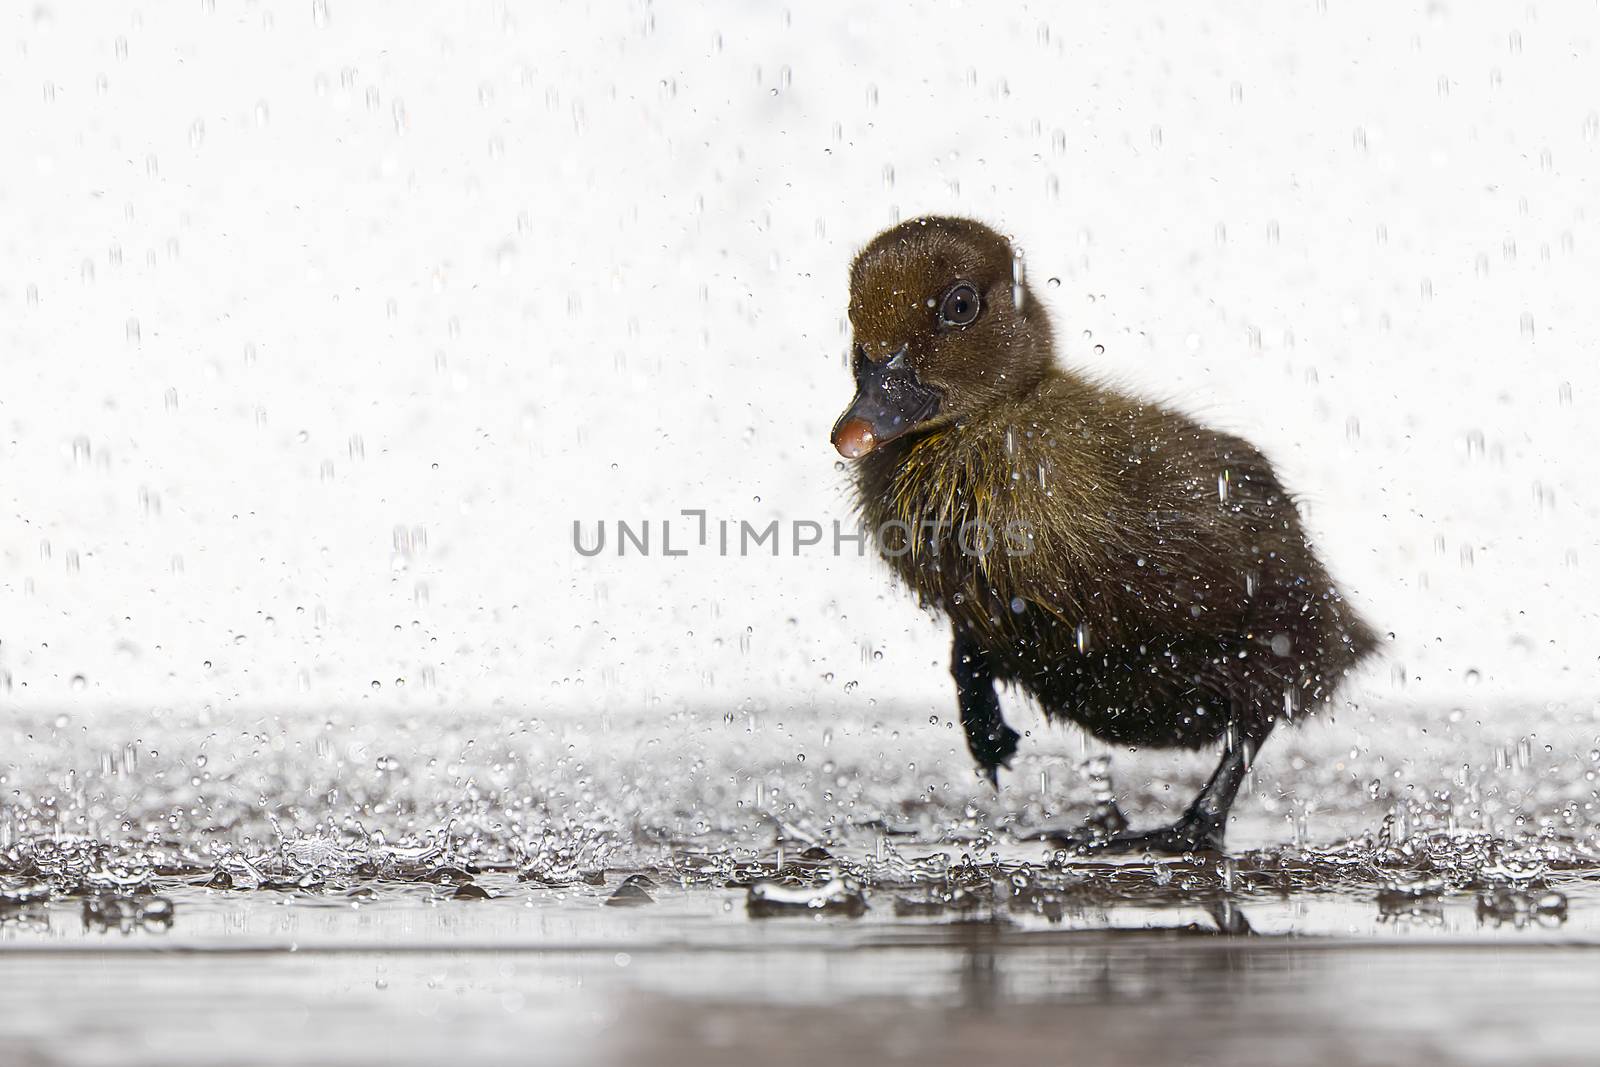 NewBorn little Cute wet duckling under rain drops. Raining wather concept. by PhotoTime